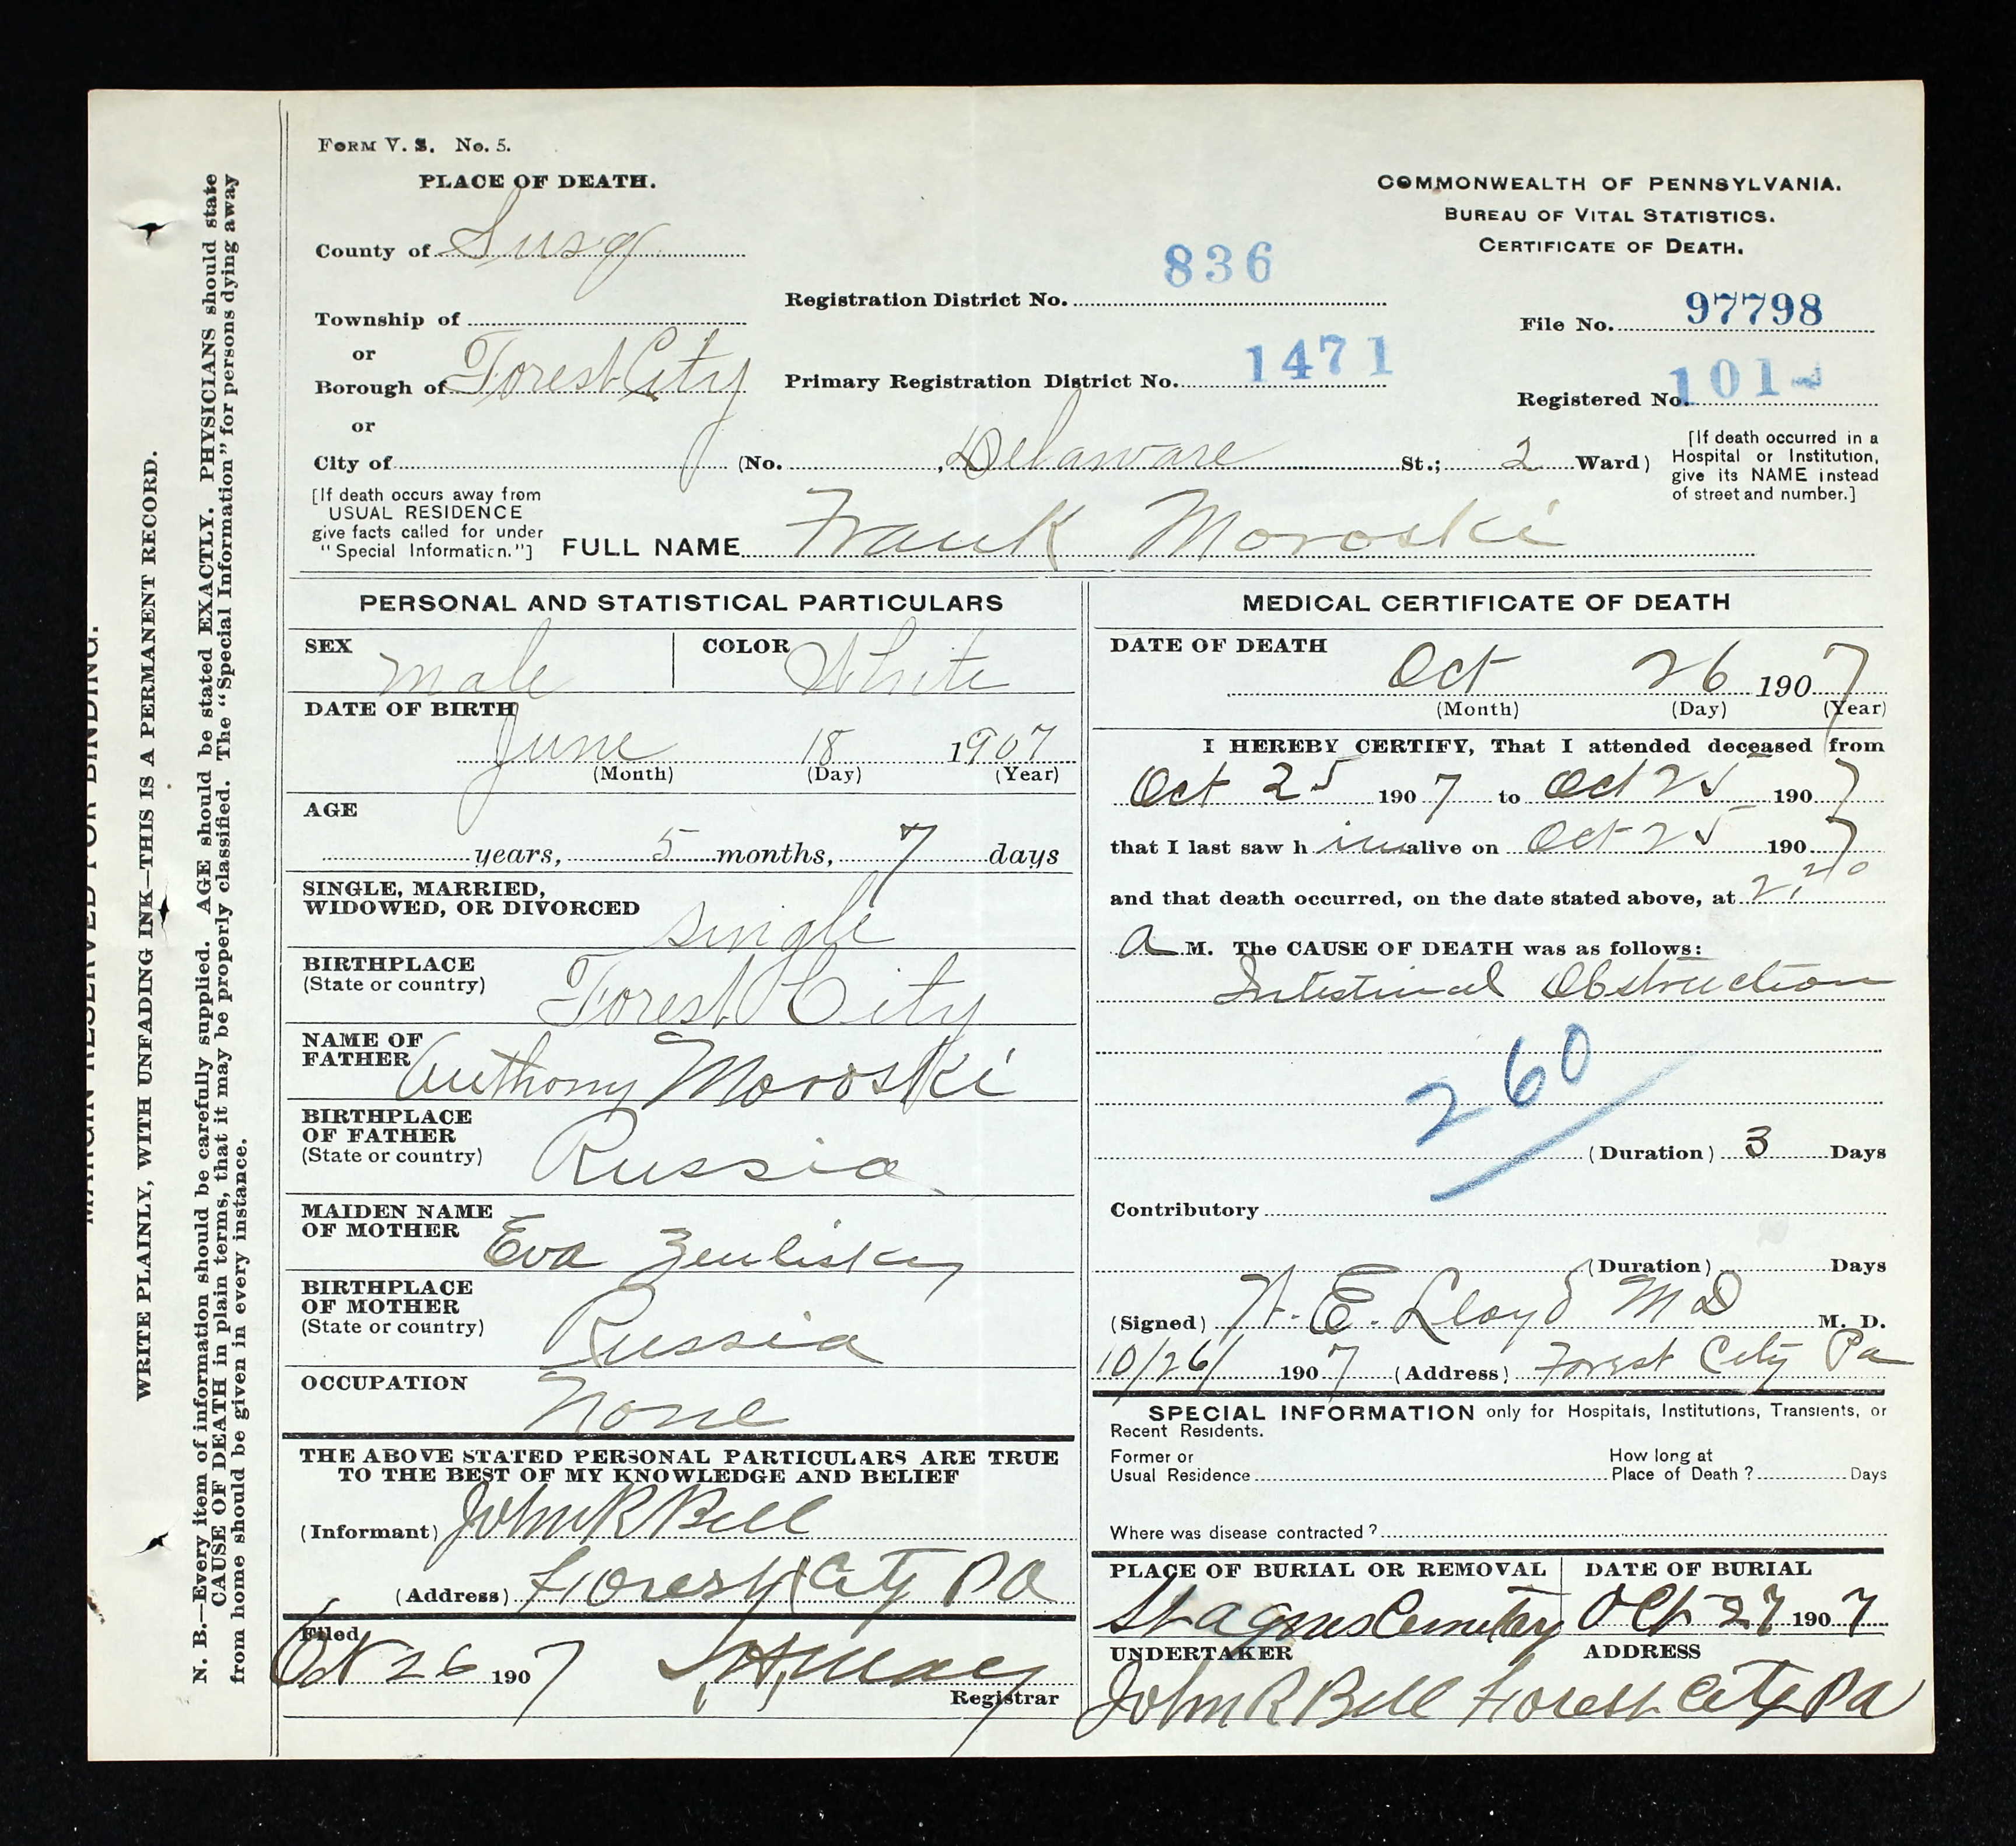 Murosky, Frank - Death Certificate.jpg